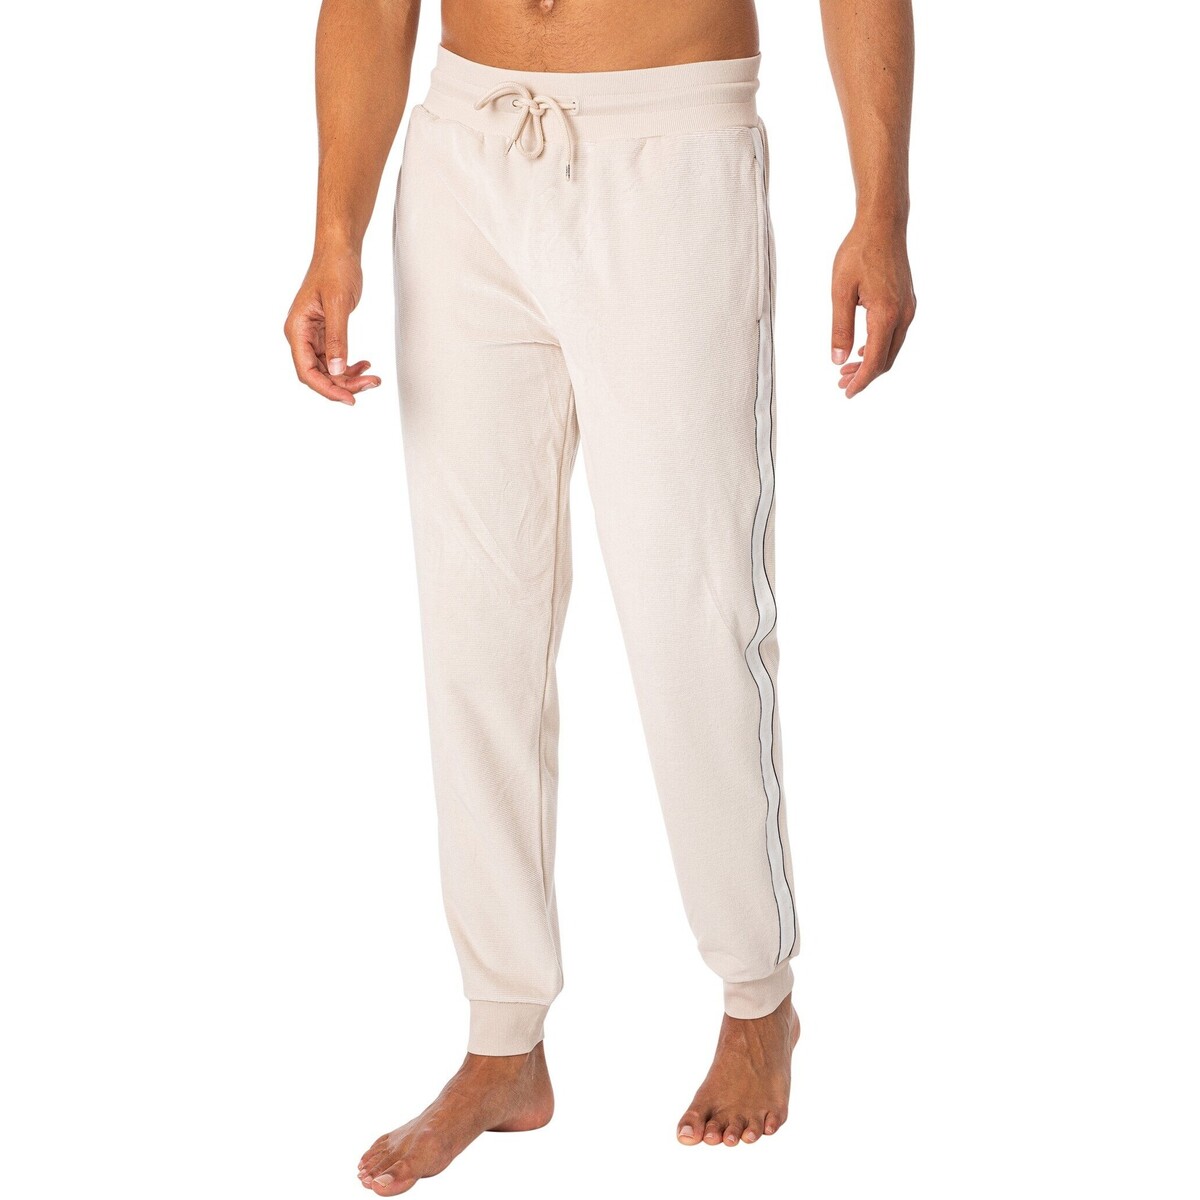 Textiel Heren Pyjama's / nachthemden Tommy Hilfiger Lounge Track geribde velours joggingbroek Beige